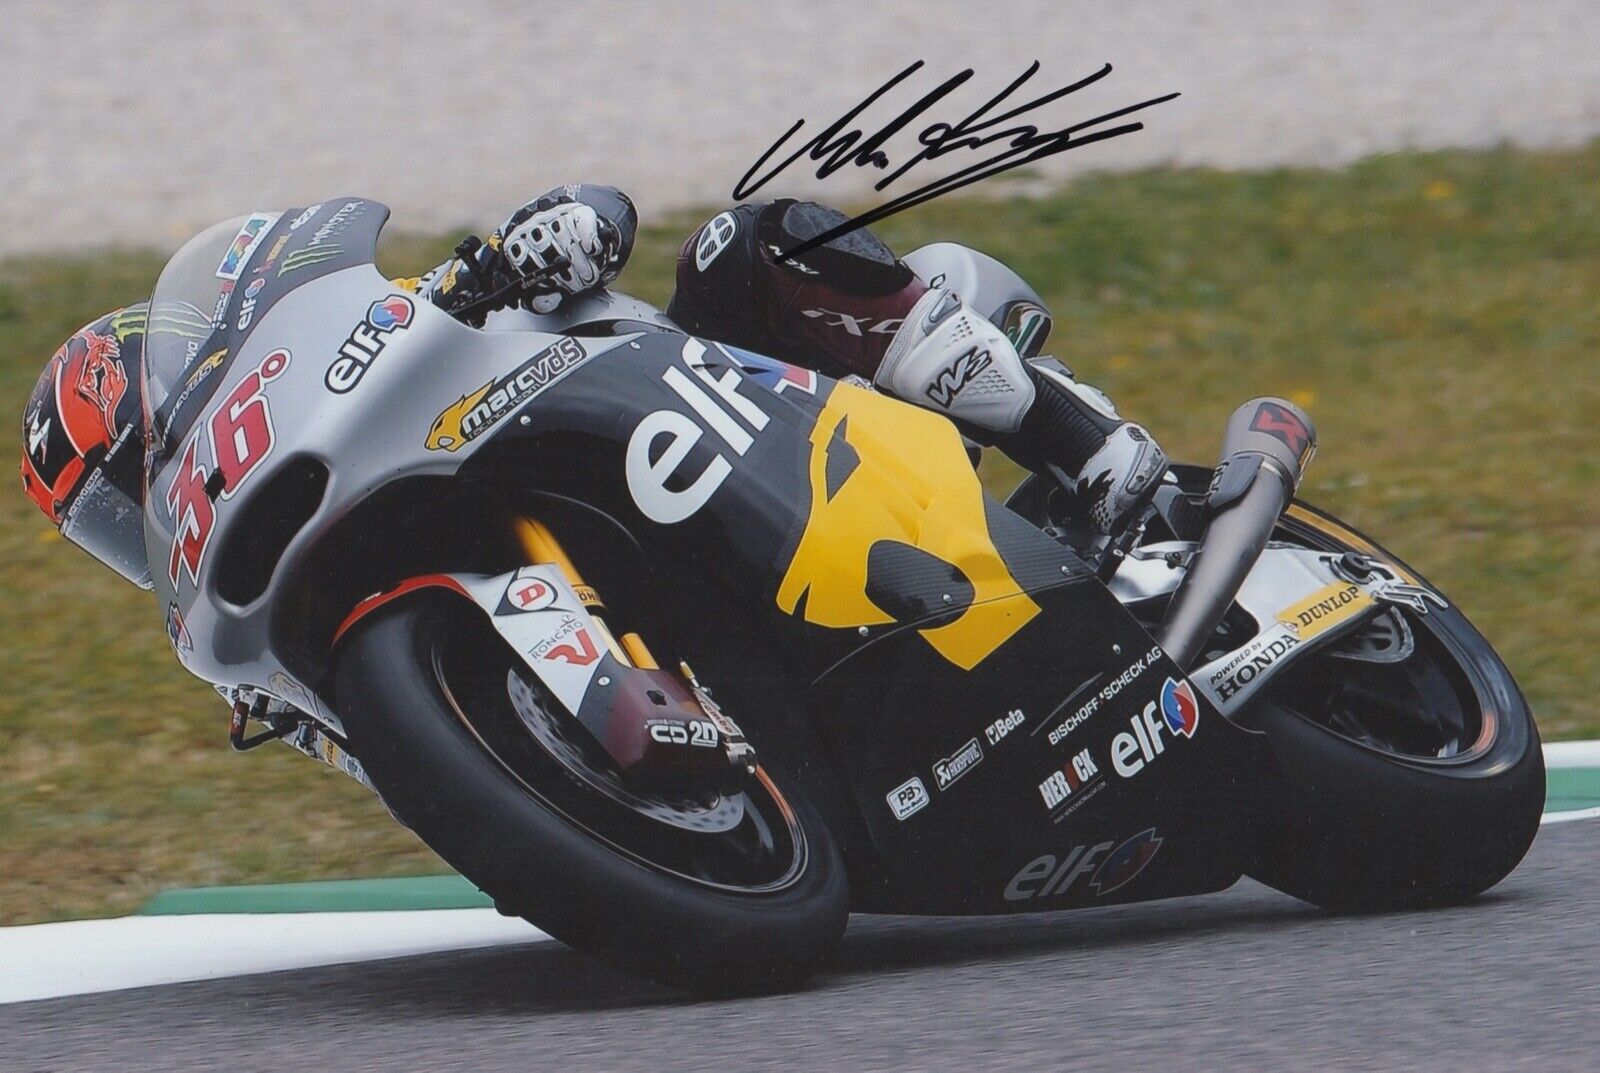 Mika Kallio Hand Signed 12x8 Photo Poster painting MotoGP Autograph Marc VDS 2014 5